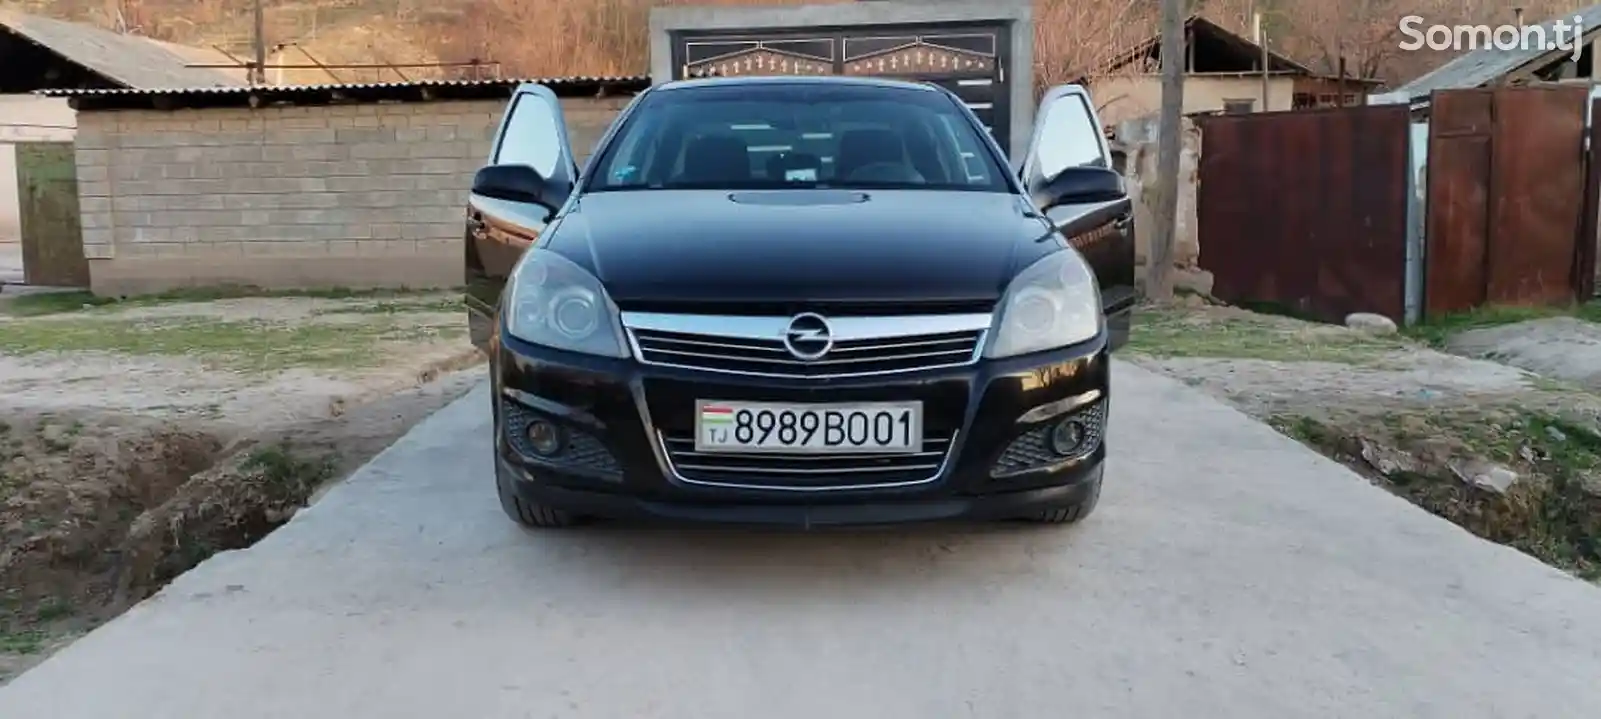 Opel Astra H, 2009-2